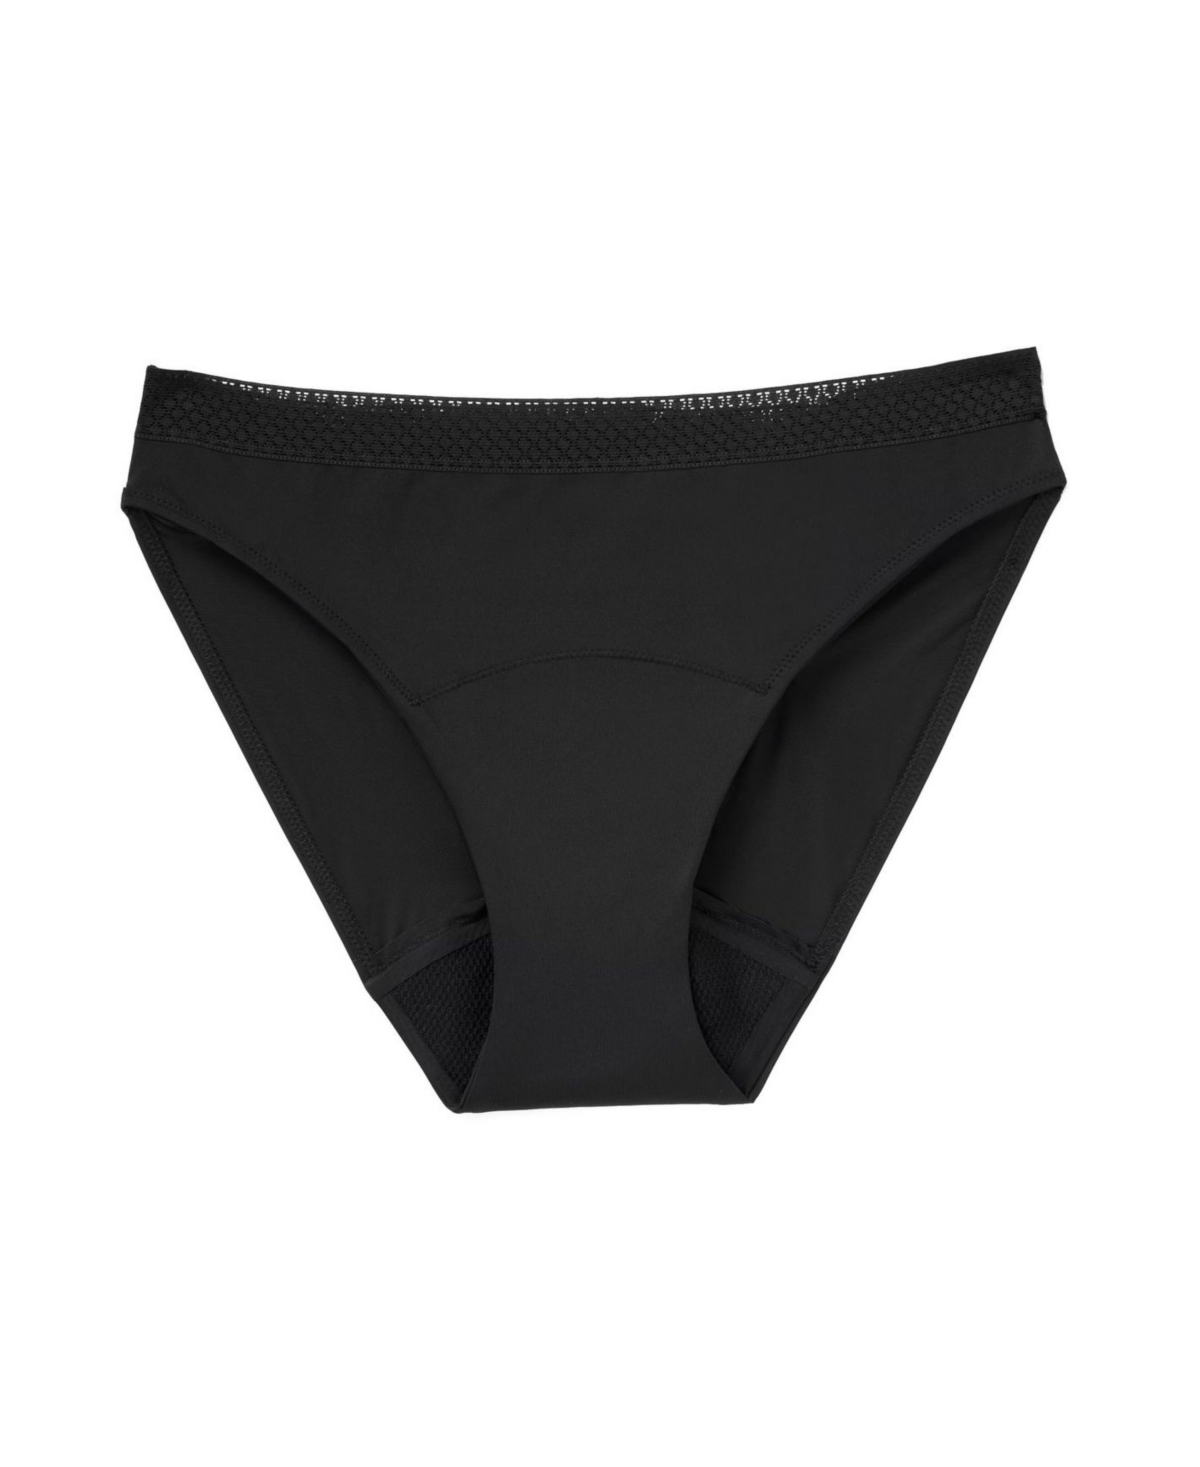 Katelin Women's Bikini Period-Proof Panty - Black